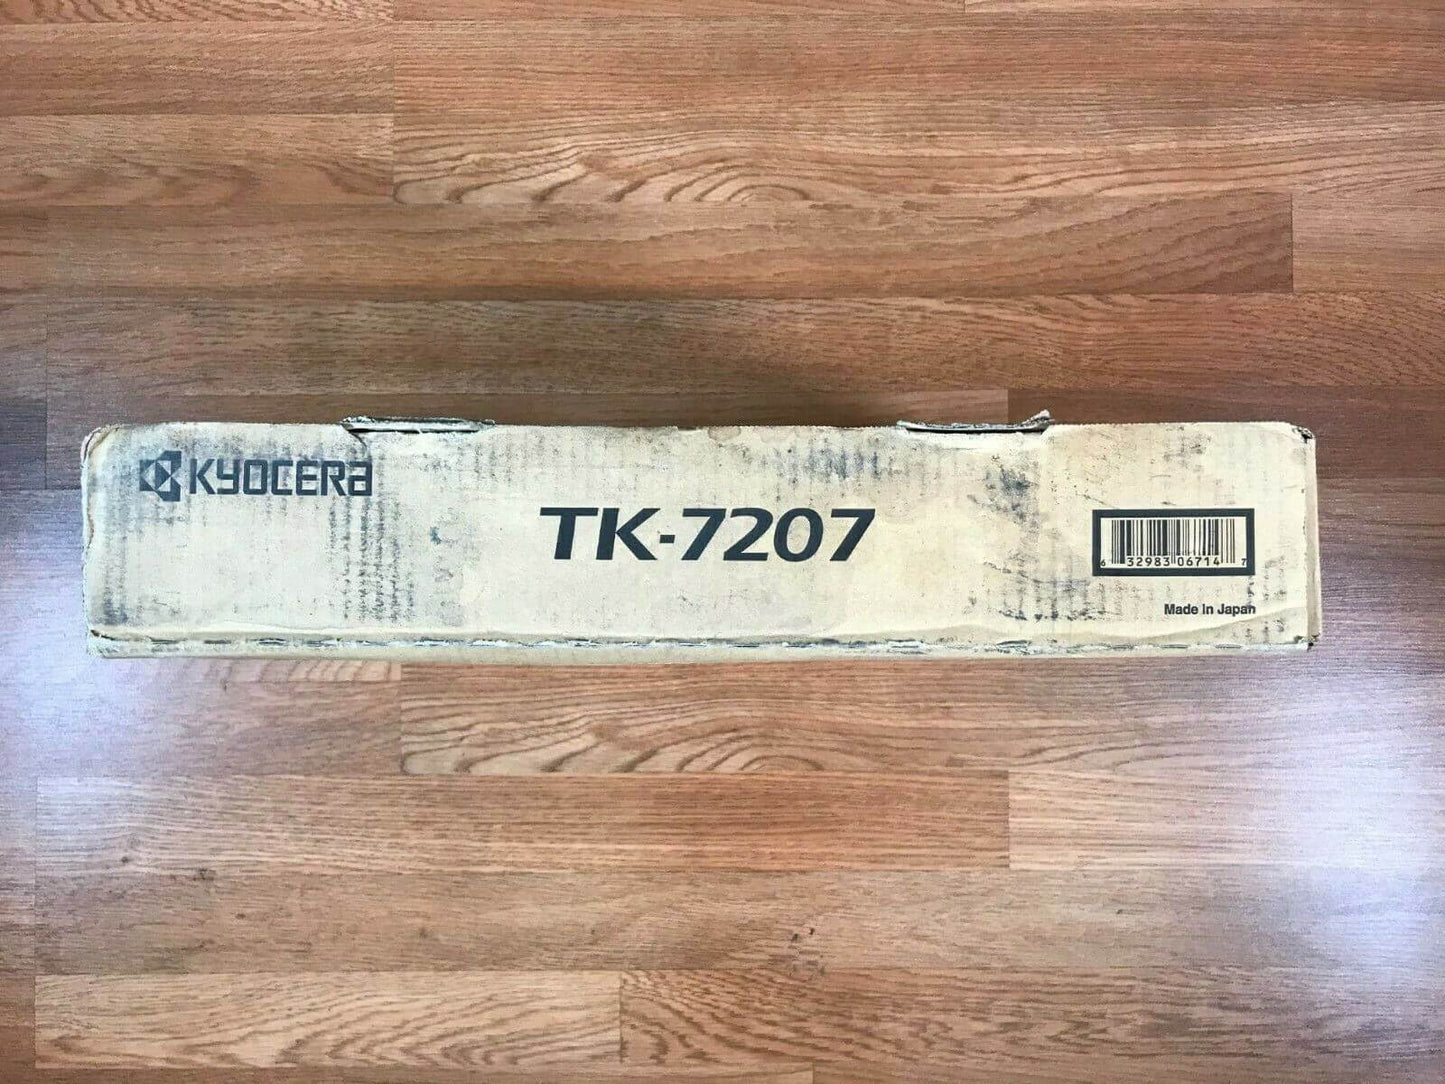 Kyocera TK-7207 (T02NL0USJ) Toner Kit For TASKalfa 3510i/3511i Same Day Shipping - copier-clearance-center